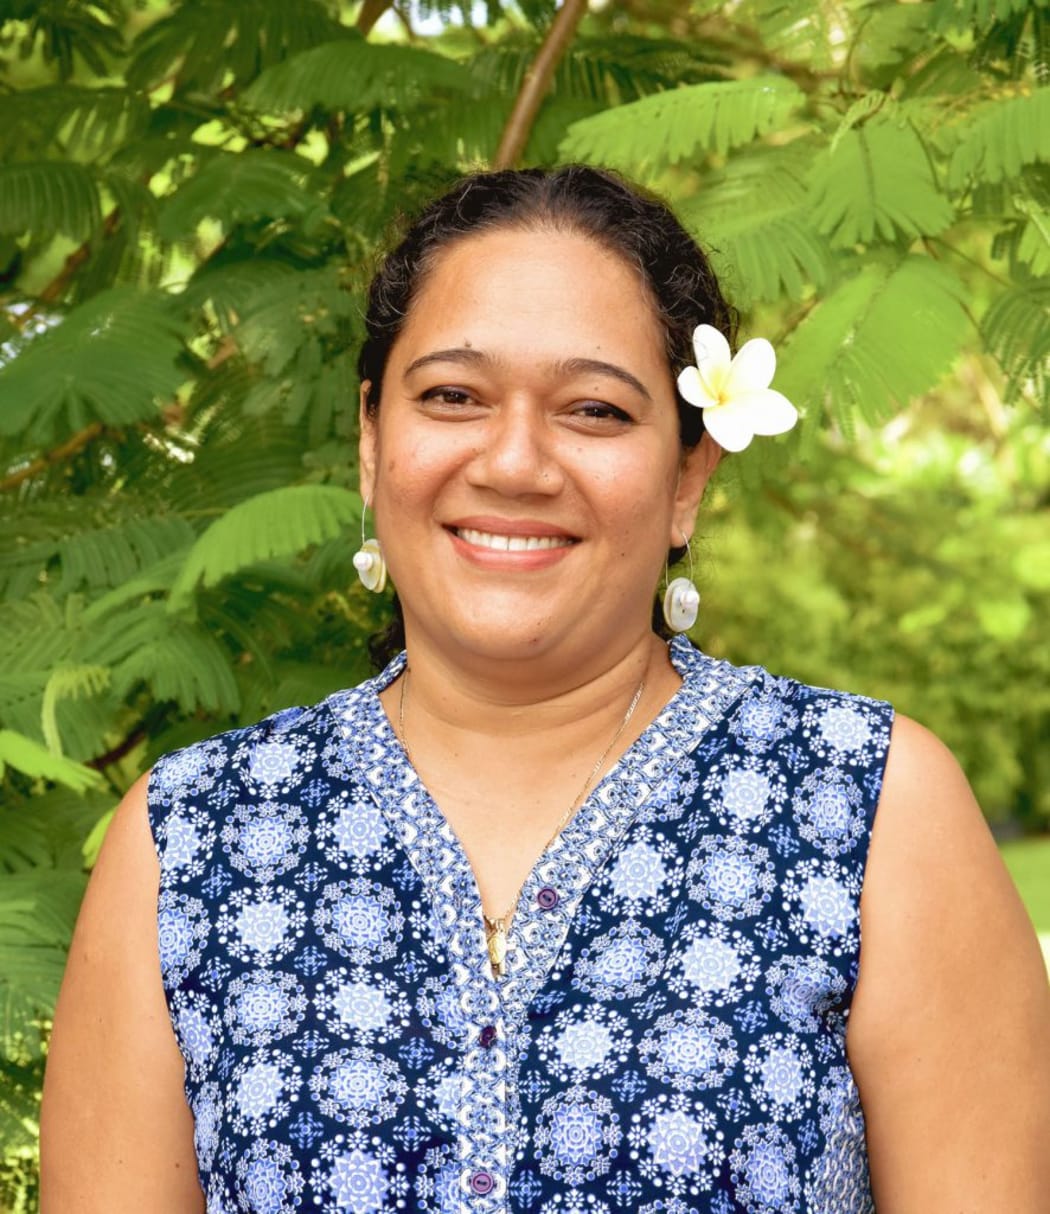 Dr Frances Koya-Vaka'uta from the USP's Oceania Centre